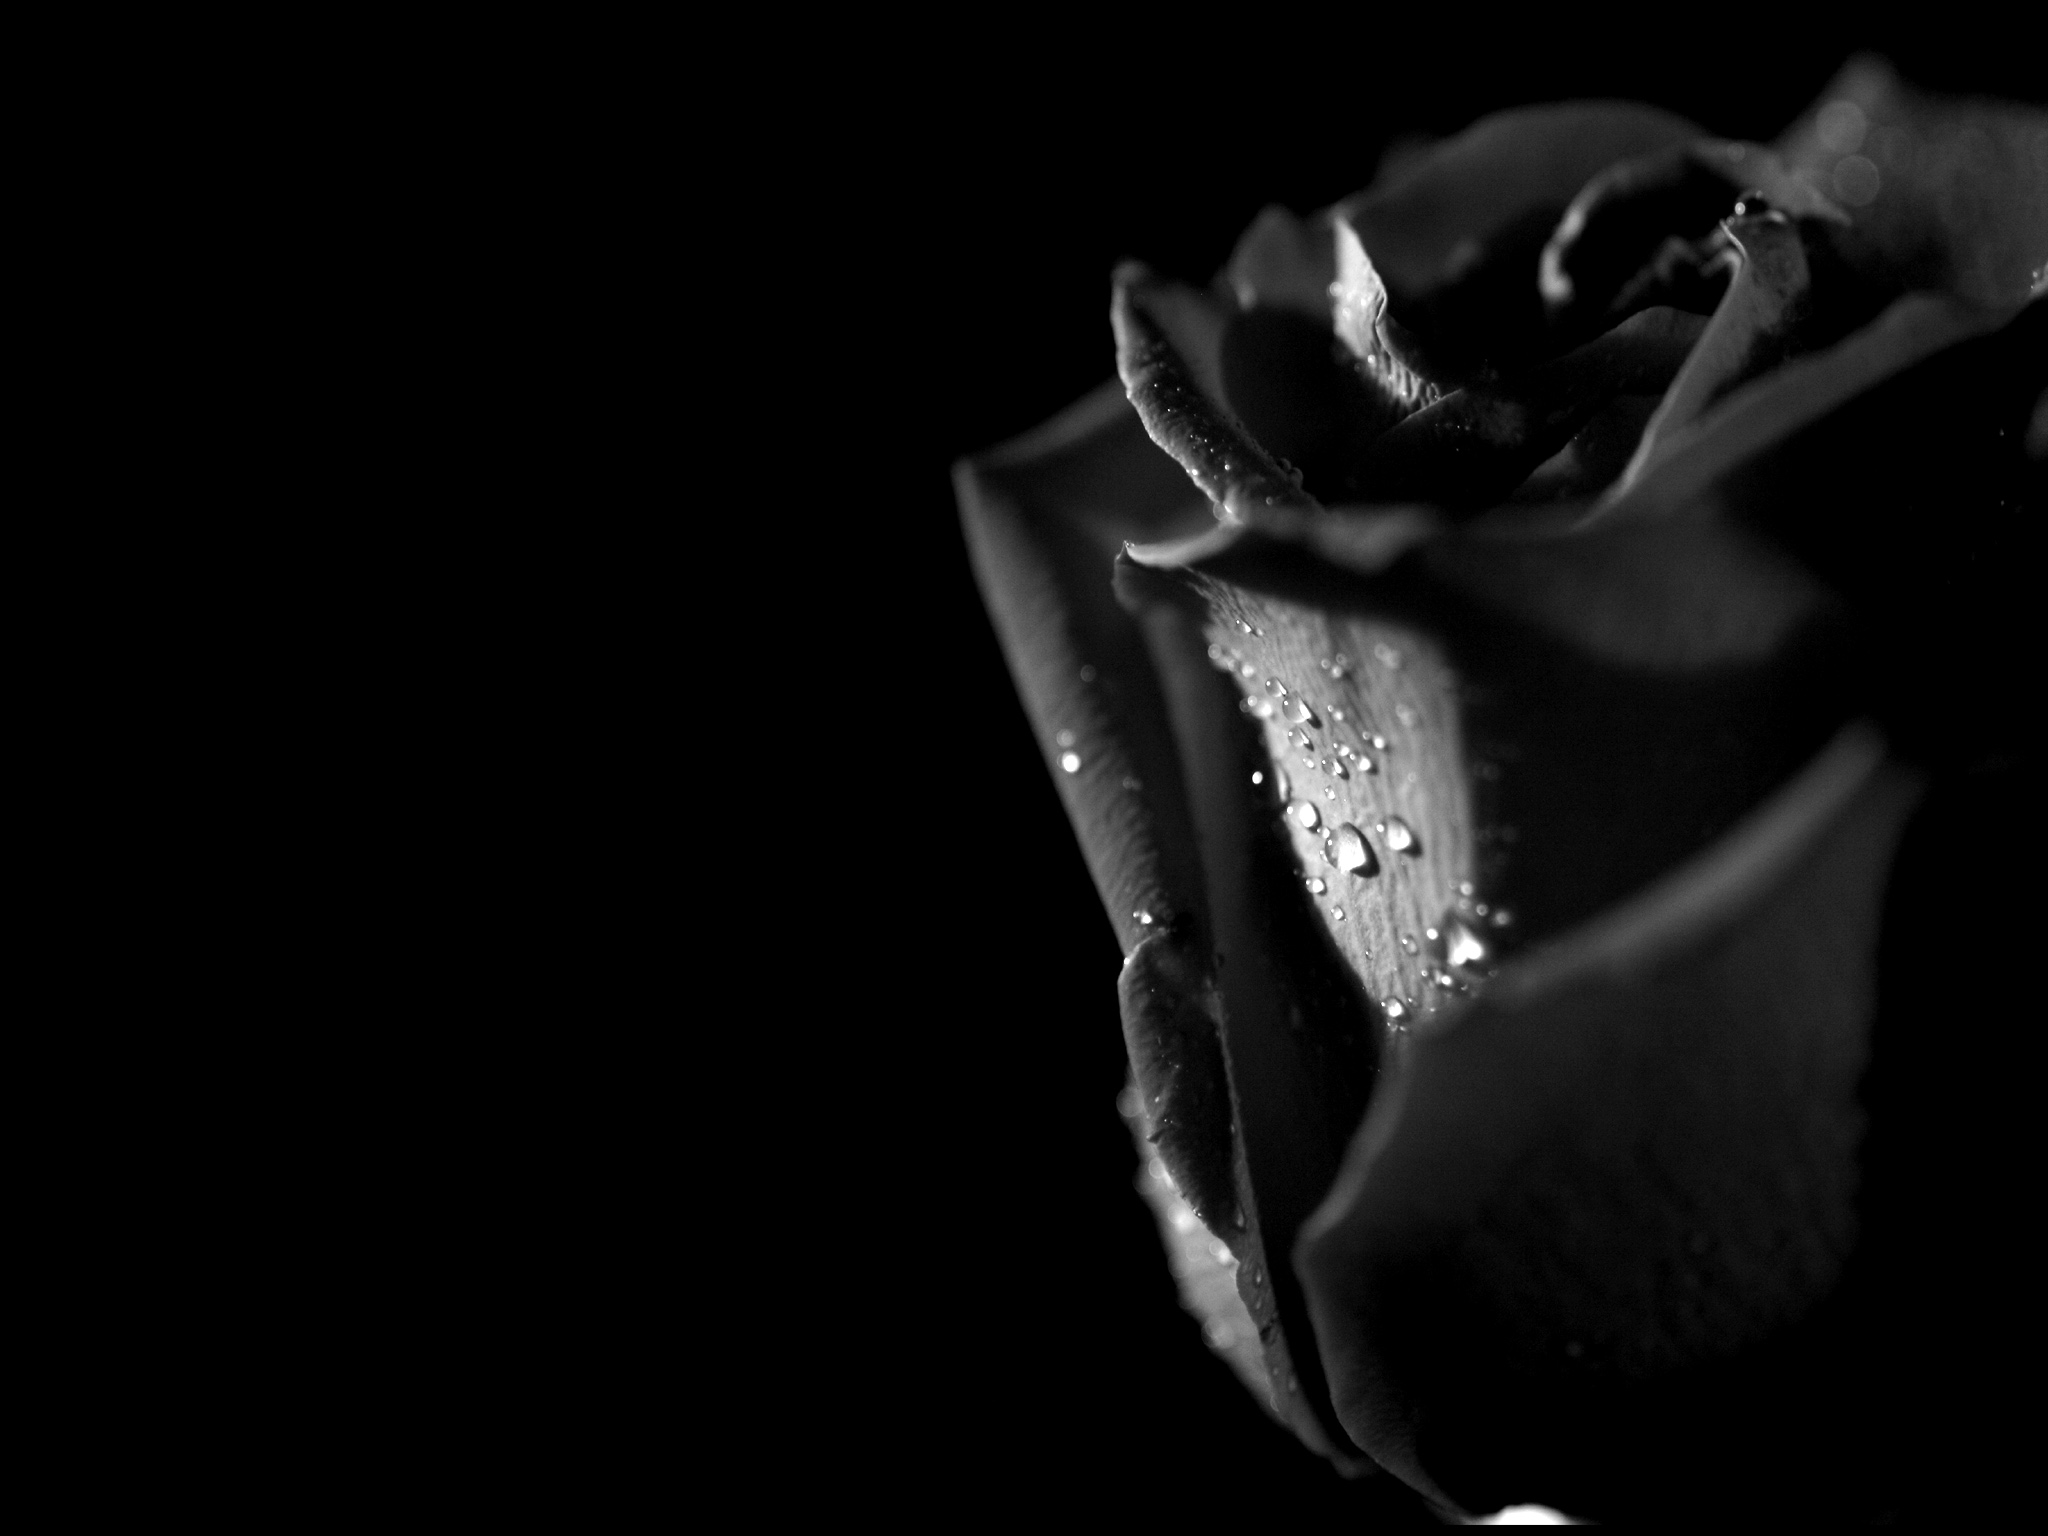 Черная роза на черном фоне